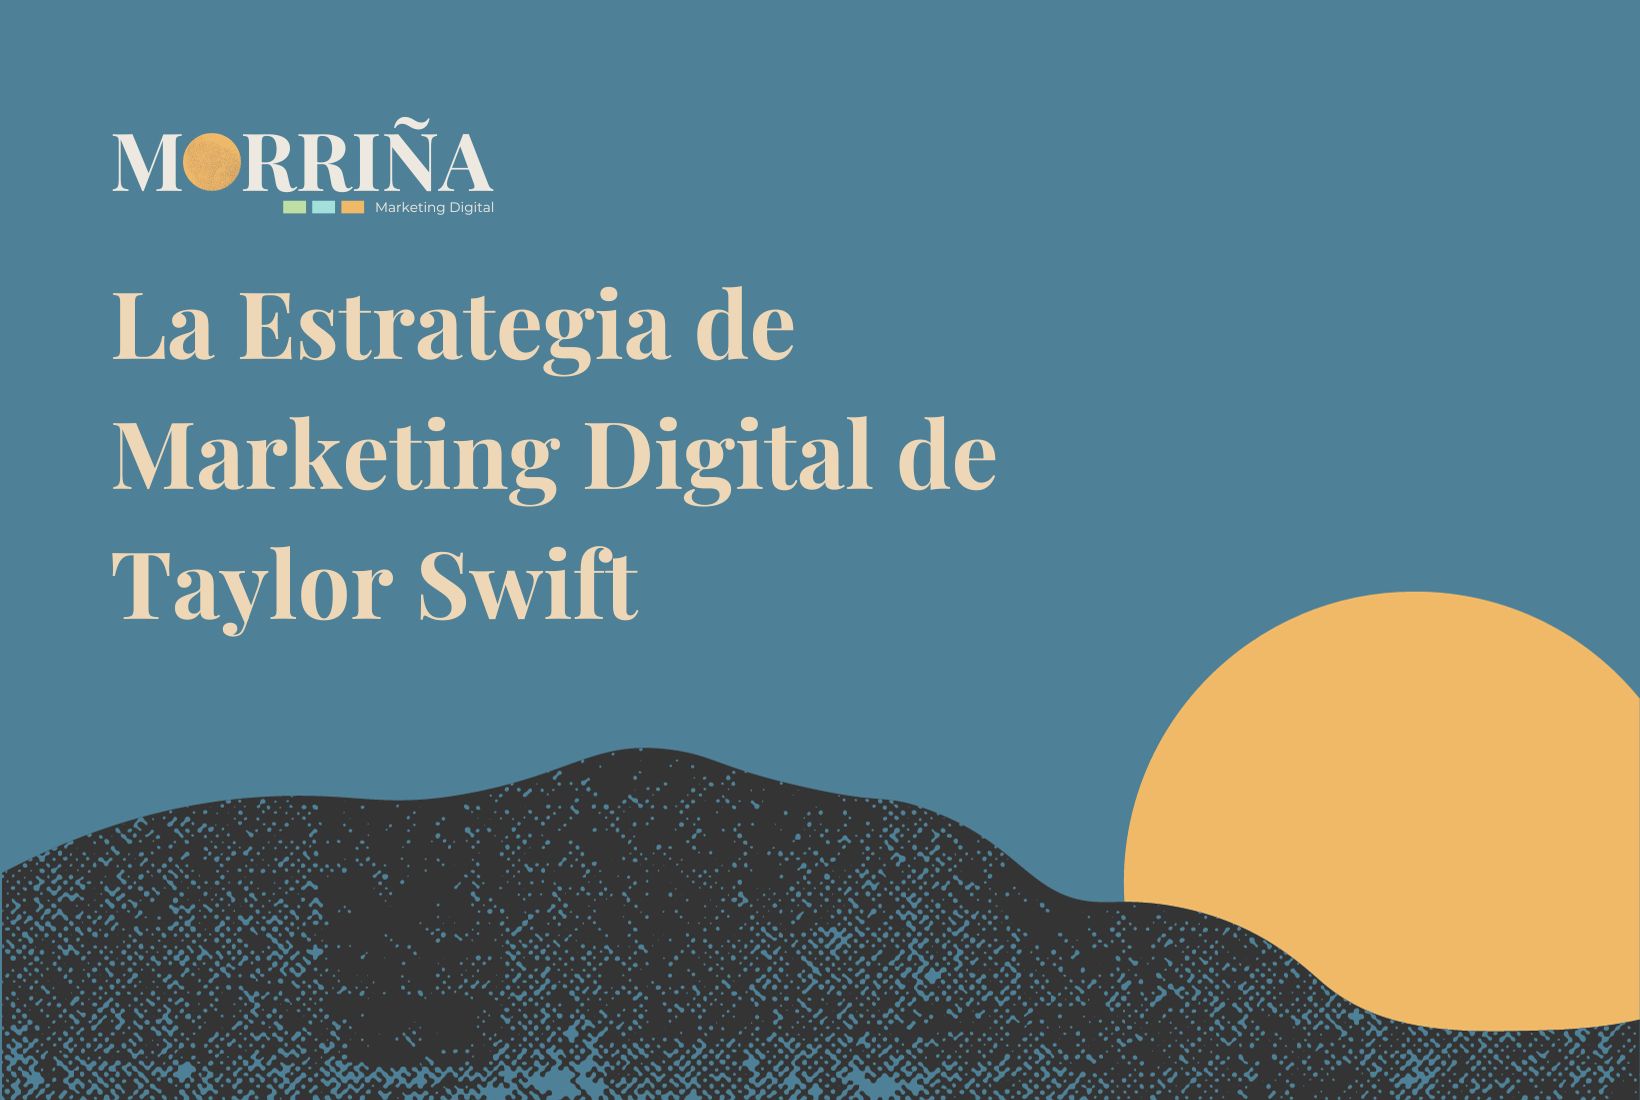 La Estrategia de Marketing Digital de Taylor Swift Morriña Marketing